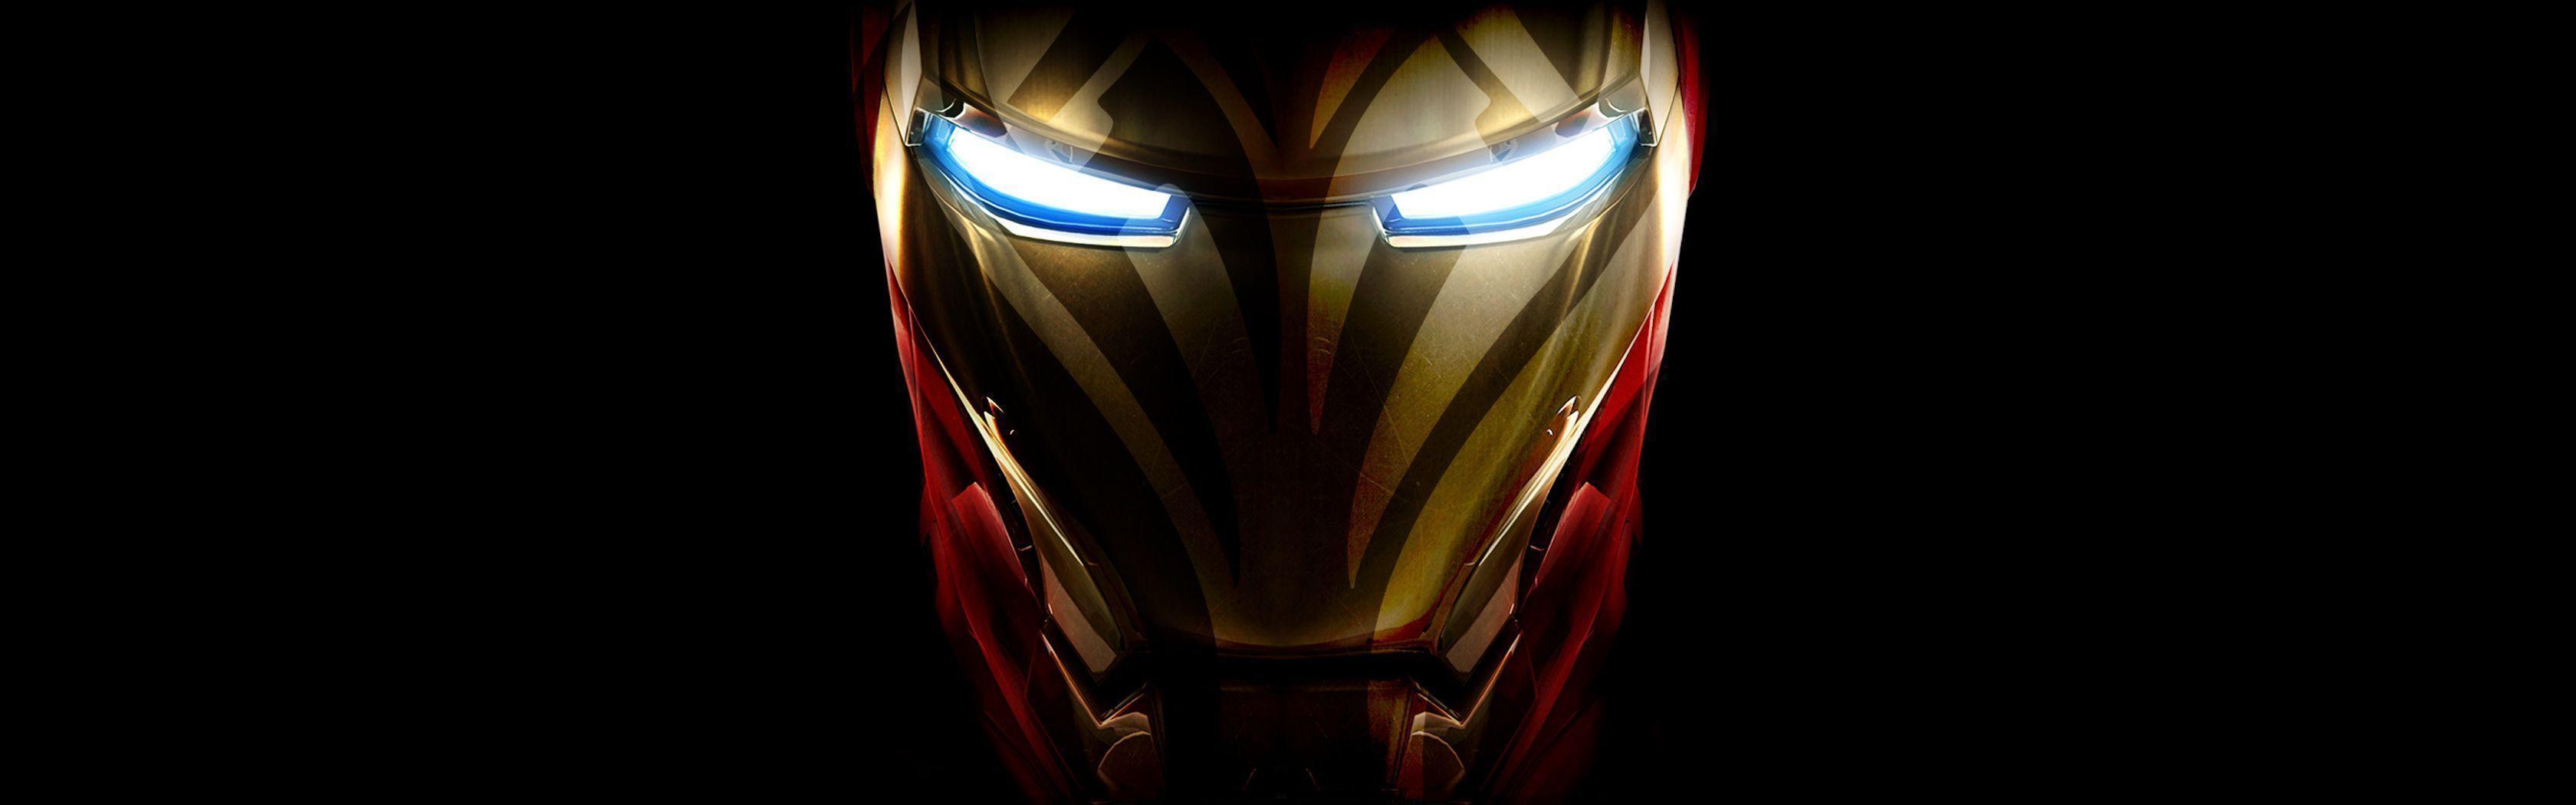 Iron Man Mask 4K Wallpaper Free Iron Man Mask 4K Background